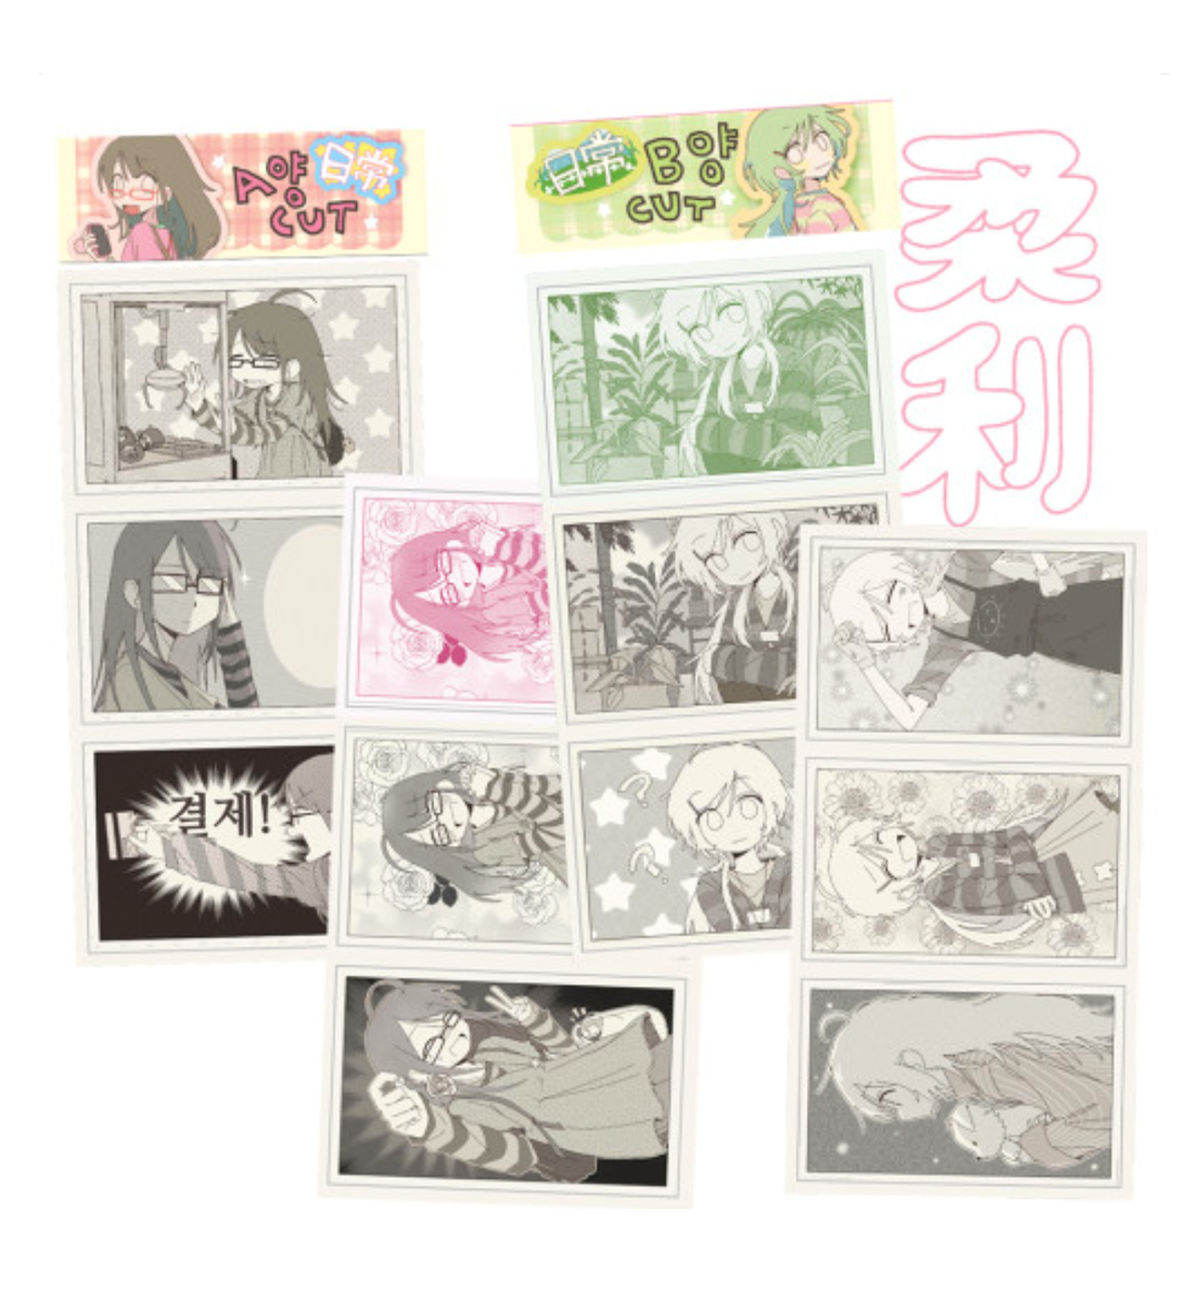 Yuri A & B Side Sticker